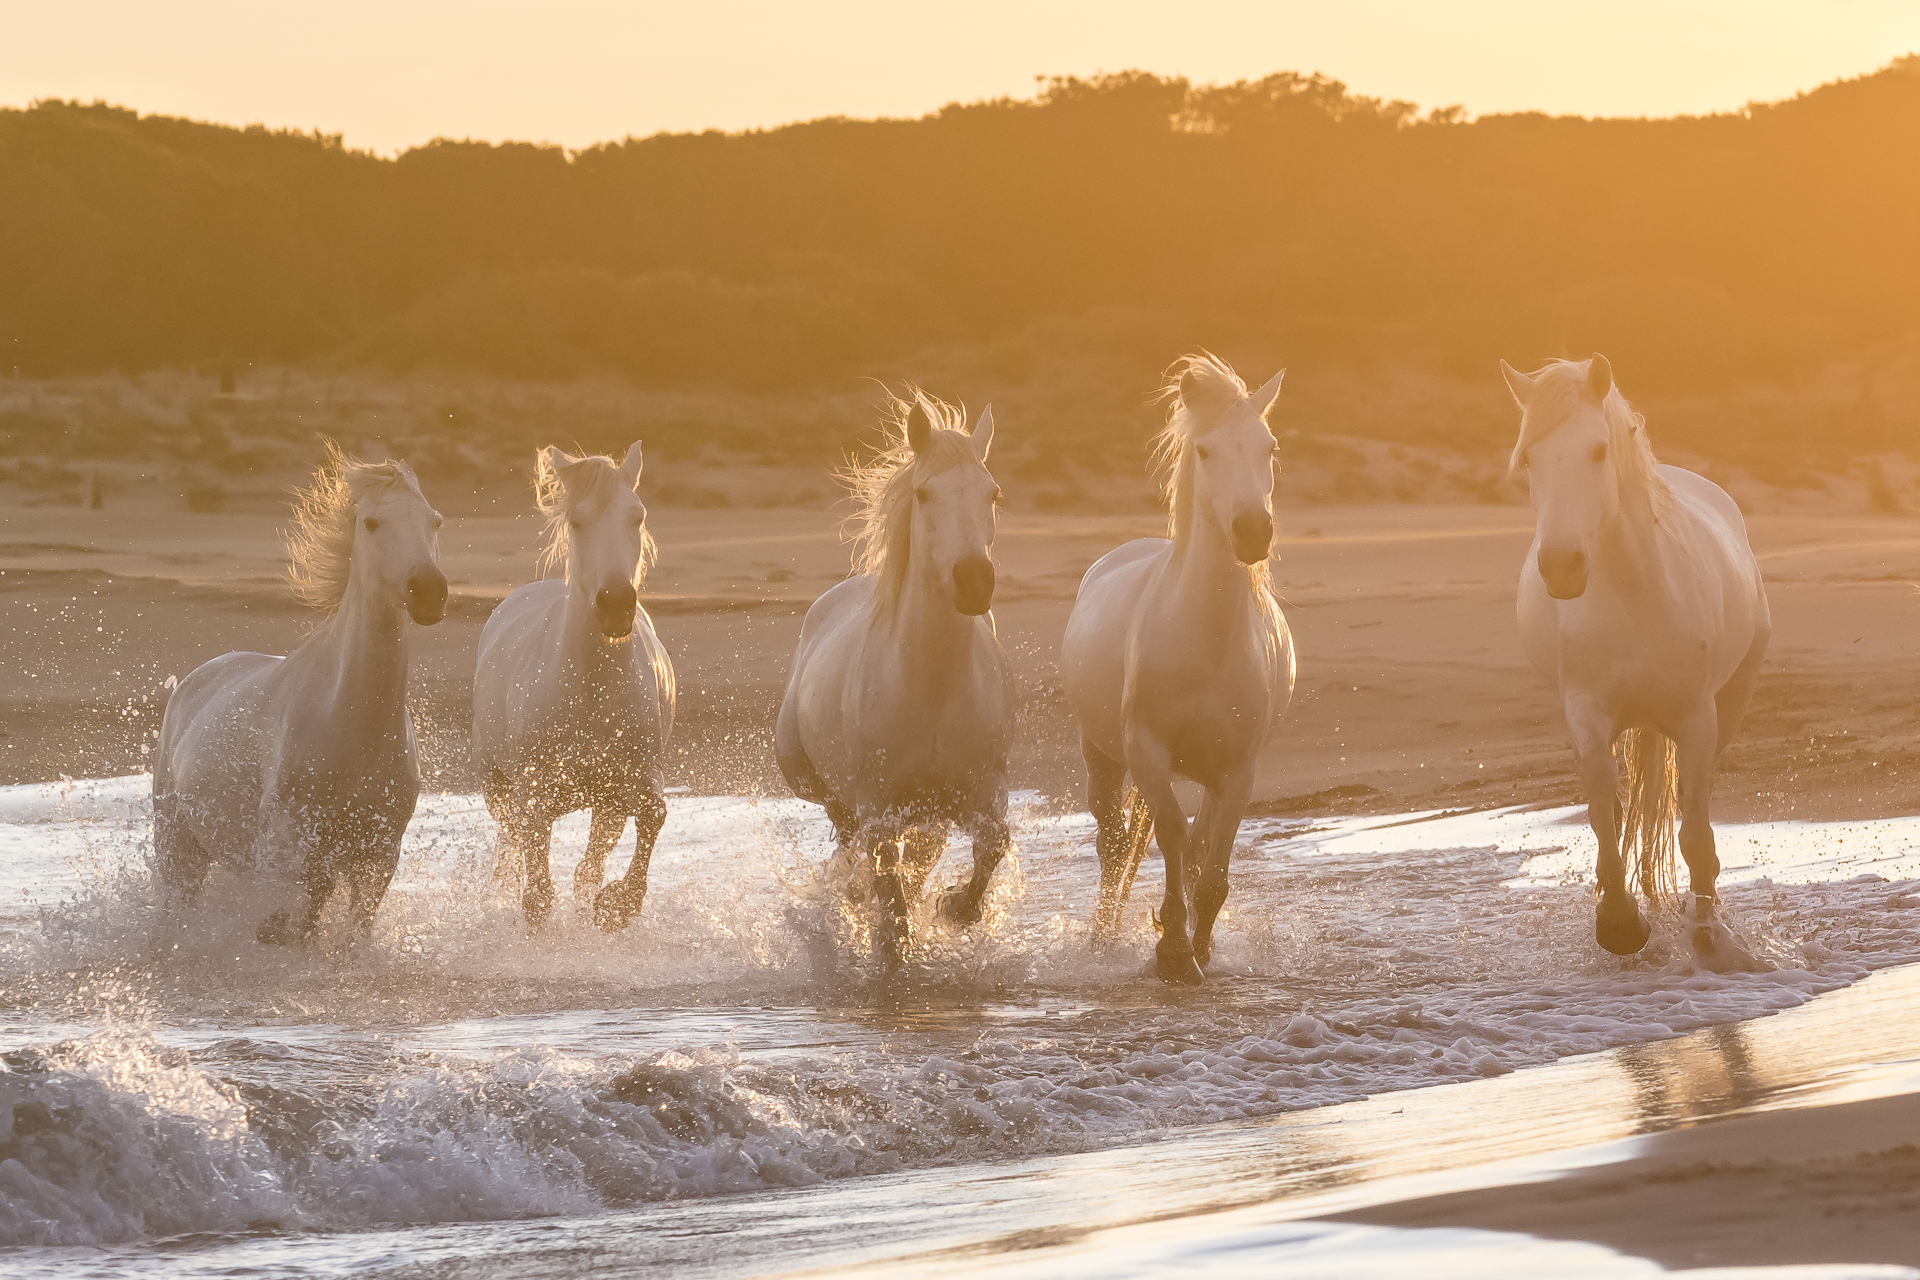 Horses running on a Mediterranean beach at sunset. Parc naturel régional de Camargue. France.